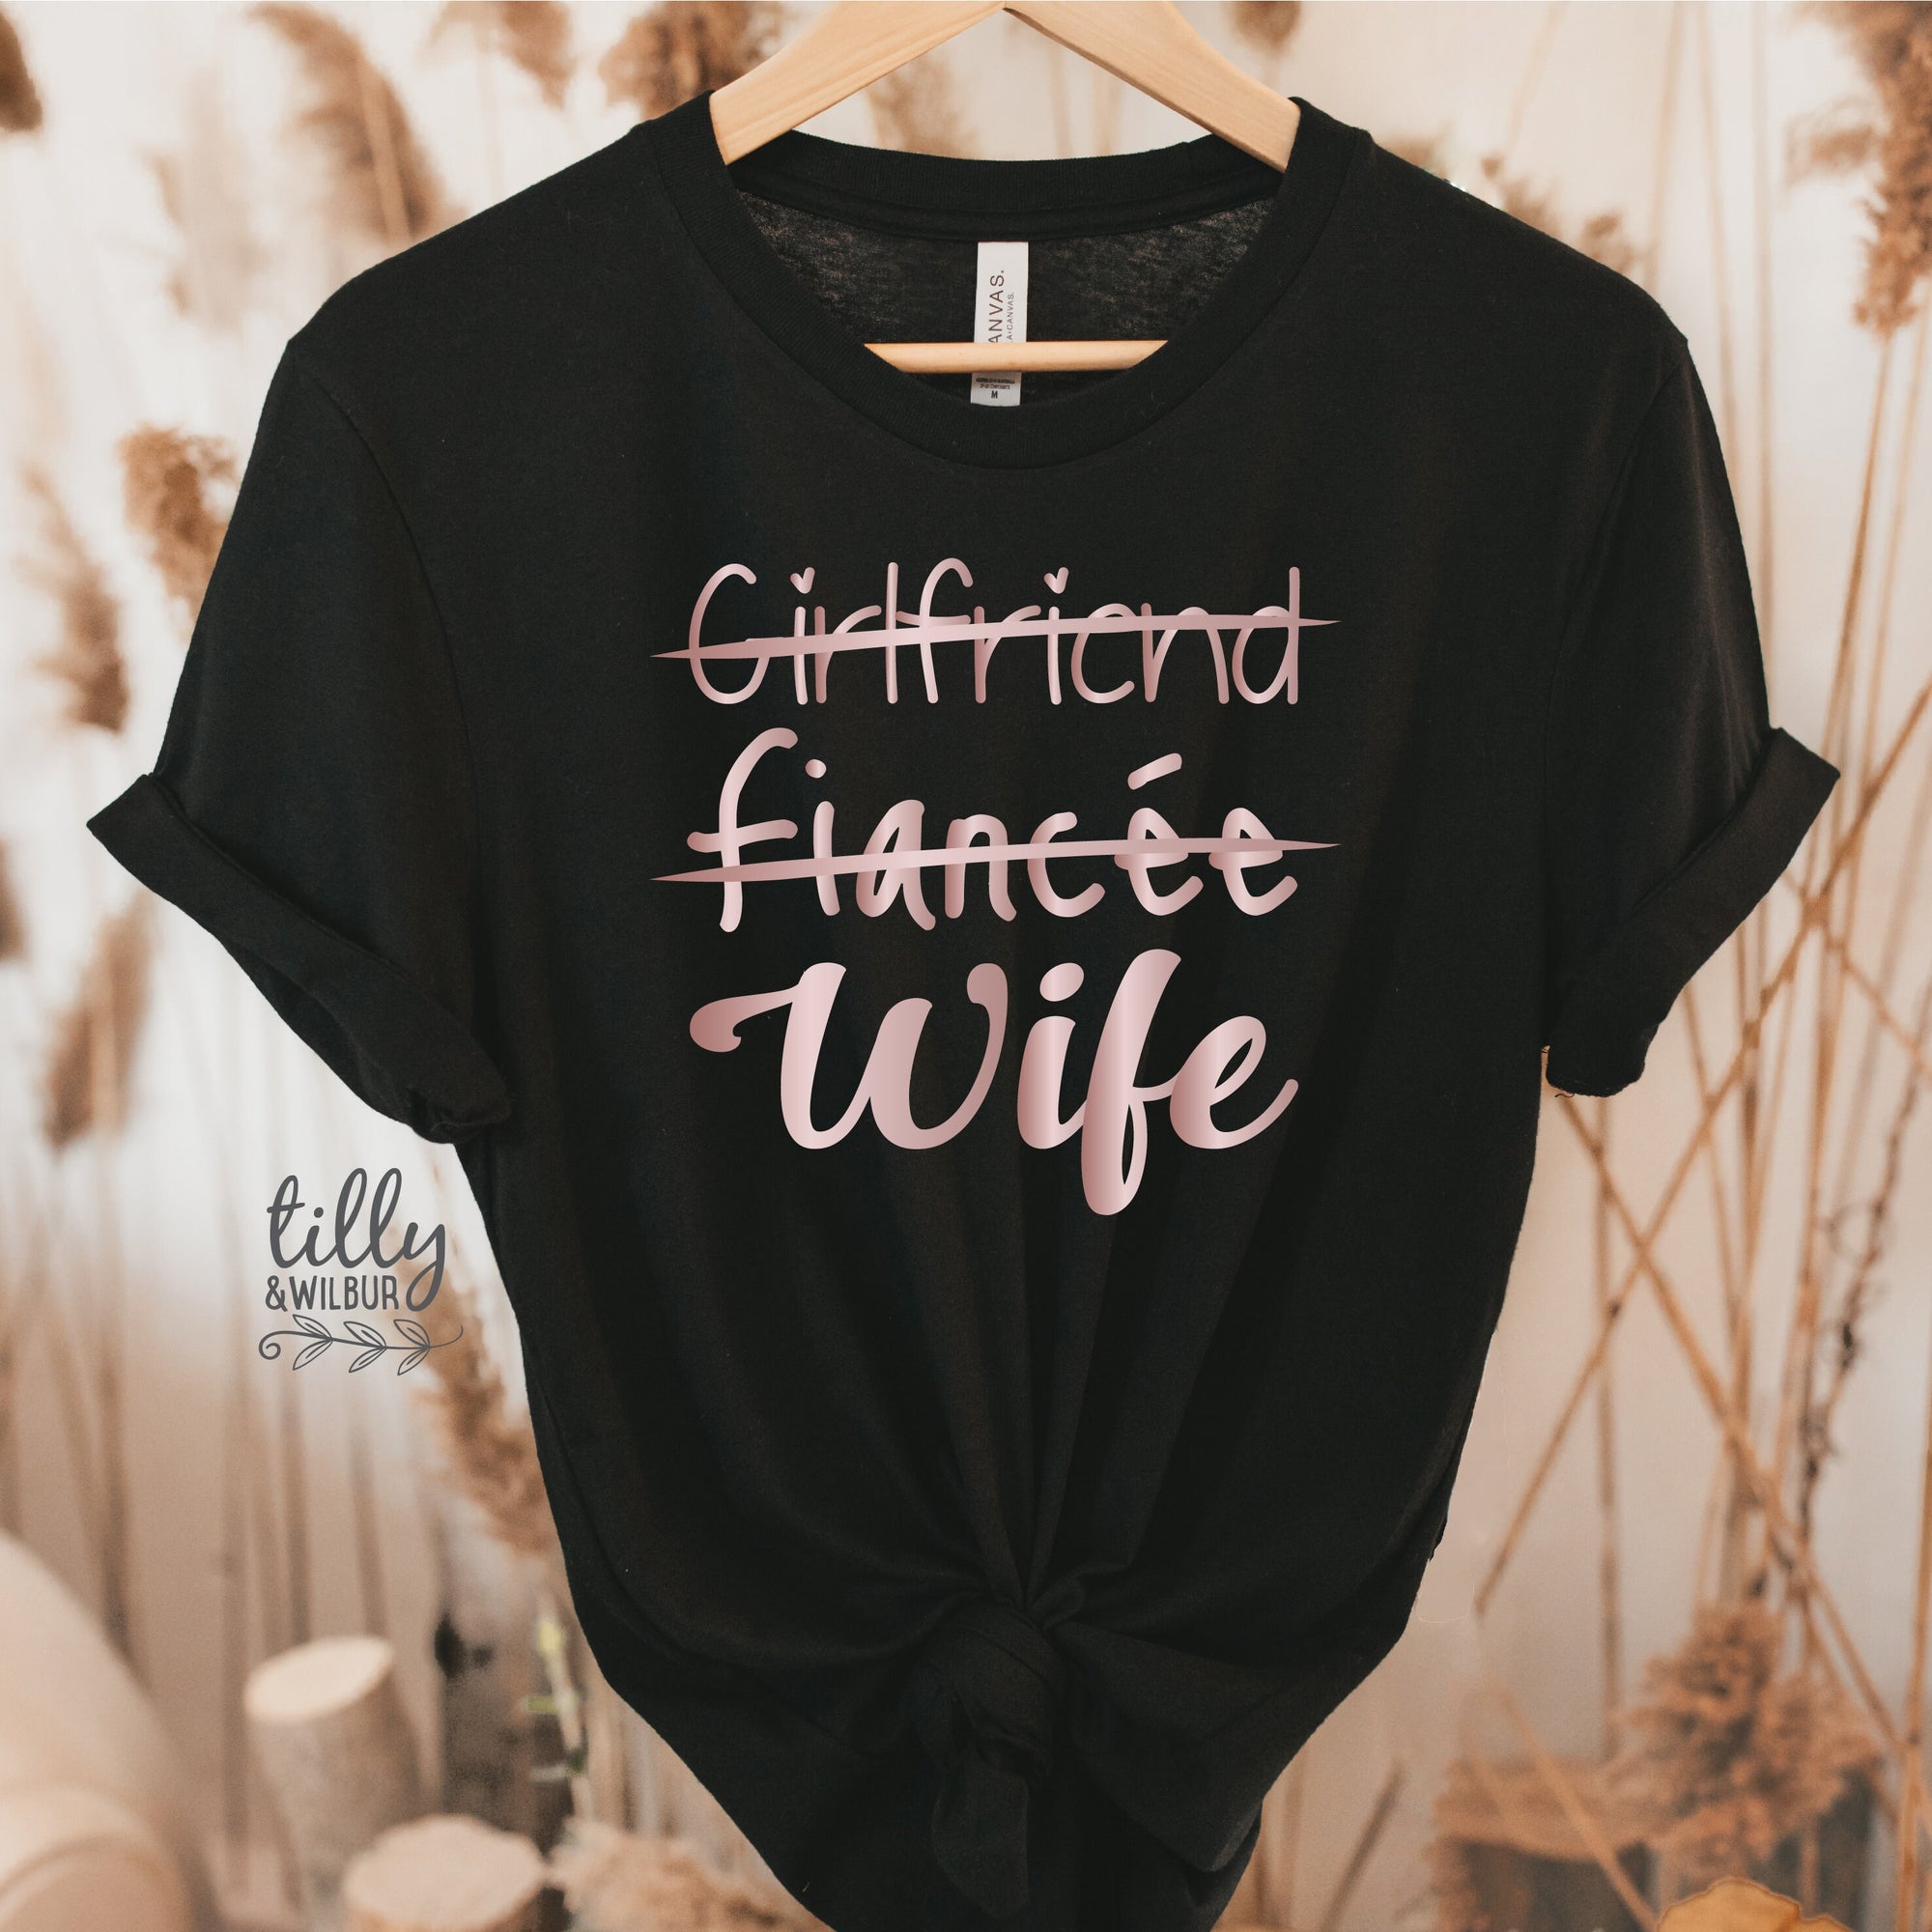 Girlfriend Fiancee Wife T-Shirt, Wedding T-Shirt, Bride T-Shirt, Wedding Gift, Engagement T-Shirt, Hens Party, Just Married, Wifey T-Shirt